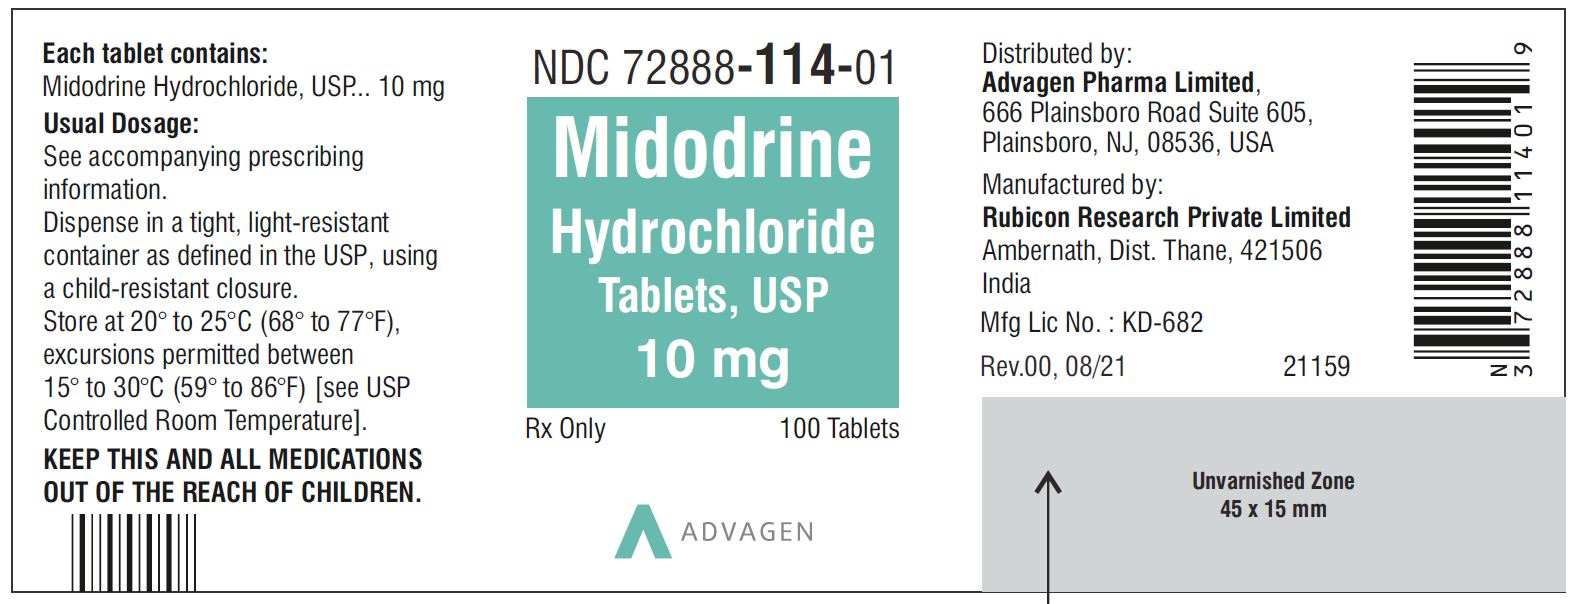 Midodrine Hydrochloride Tablets, USP 10mg - 100 Tablets - NDC: <a href=/NDC/72888-114-01>72888-114-01</a>